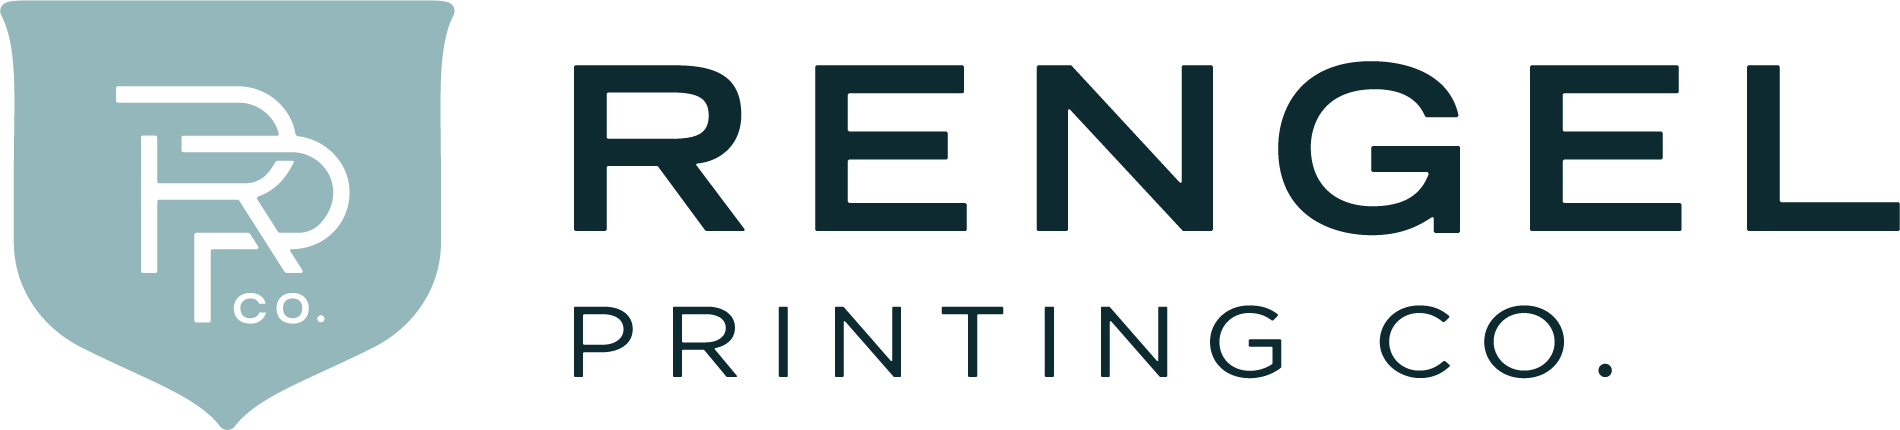 Rengel Printing